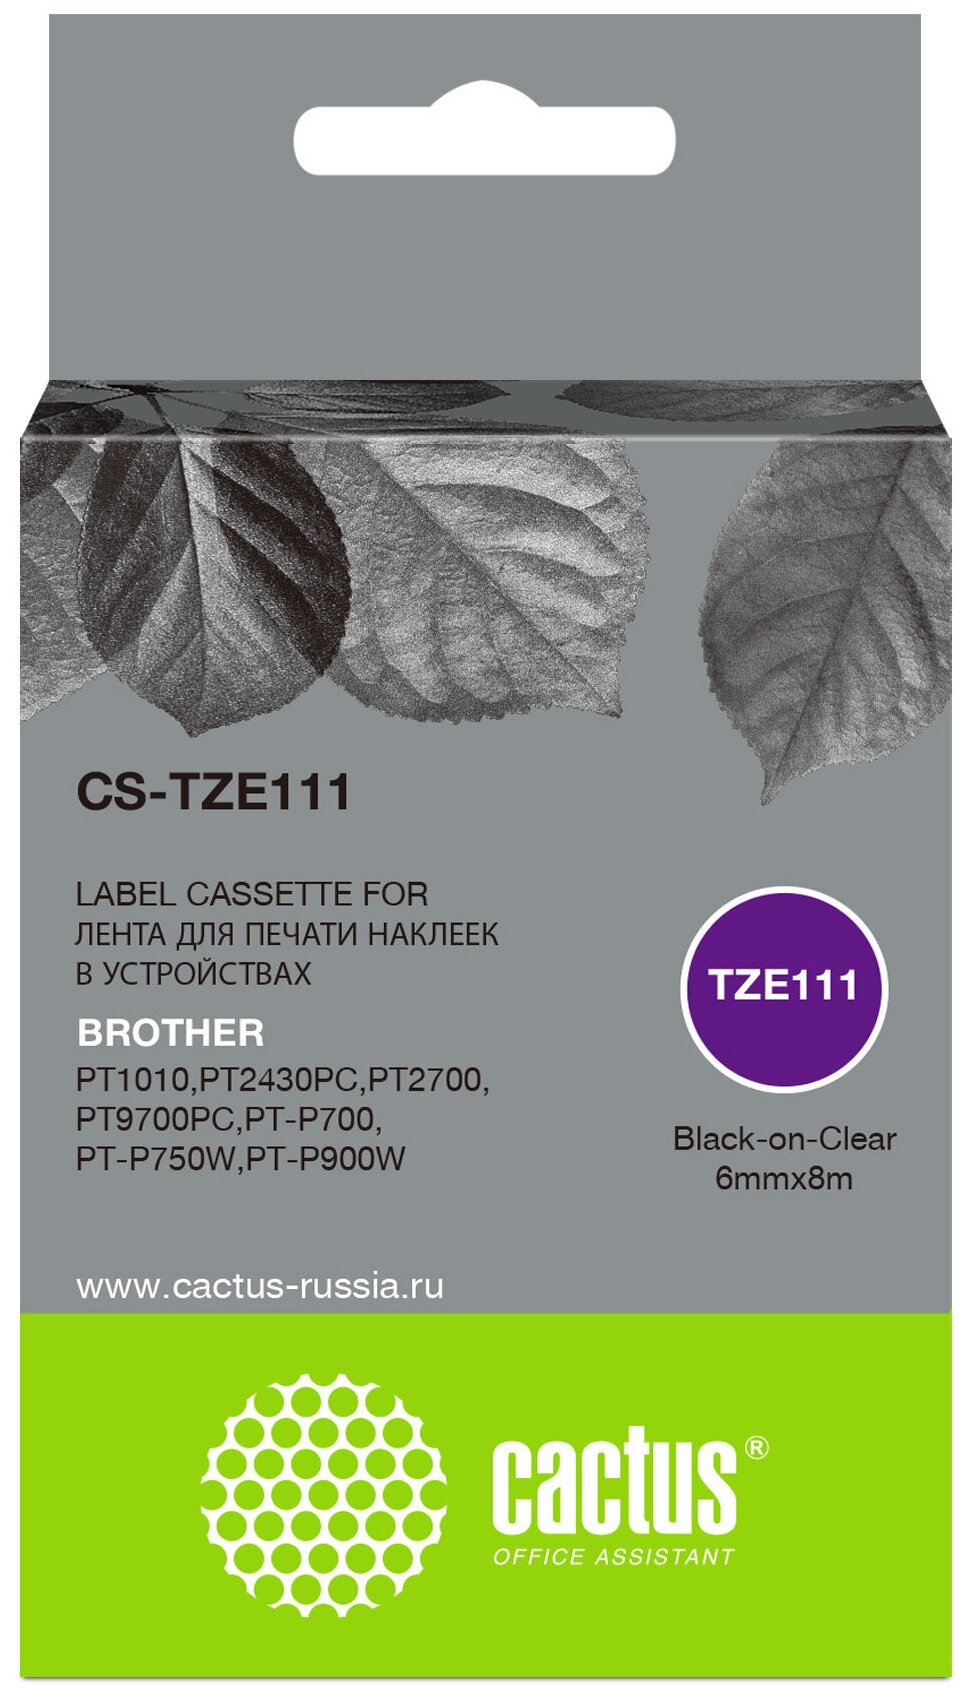 Картридж Cactus CS-TZE111, совместимый